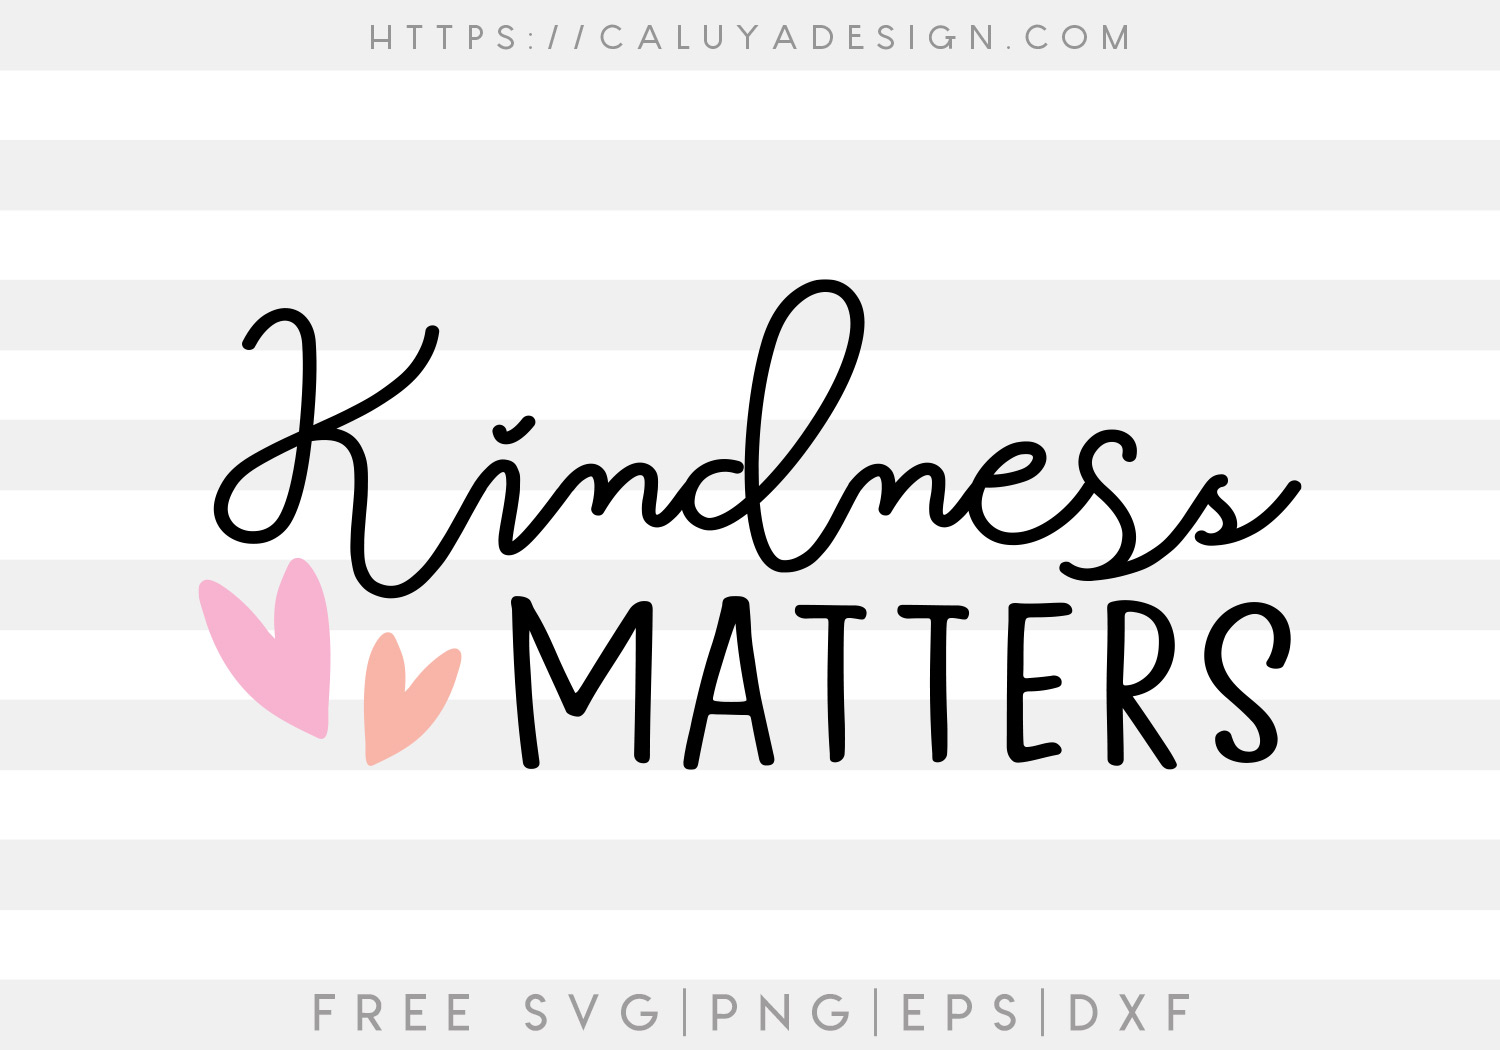 Kindness Matters SVG, PNG, EPS & DXF